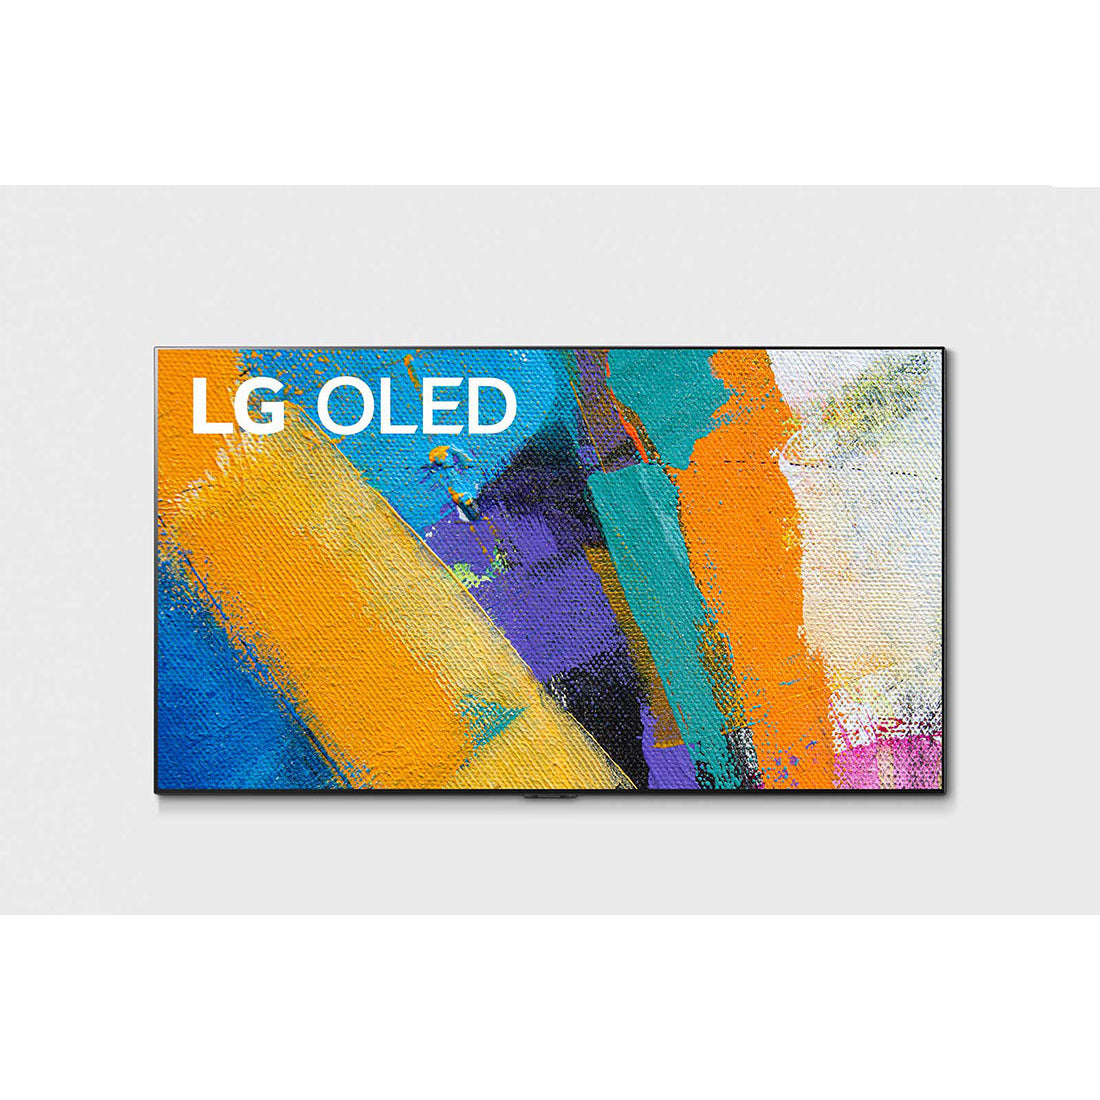 Smart televize LG OLED65GX (2020) / 65&quot; (164 cm)